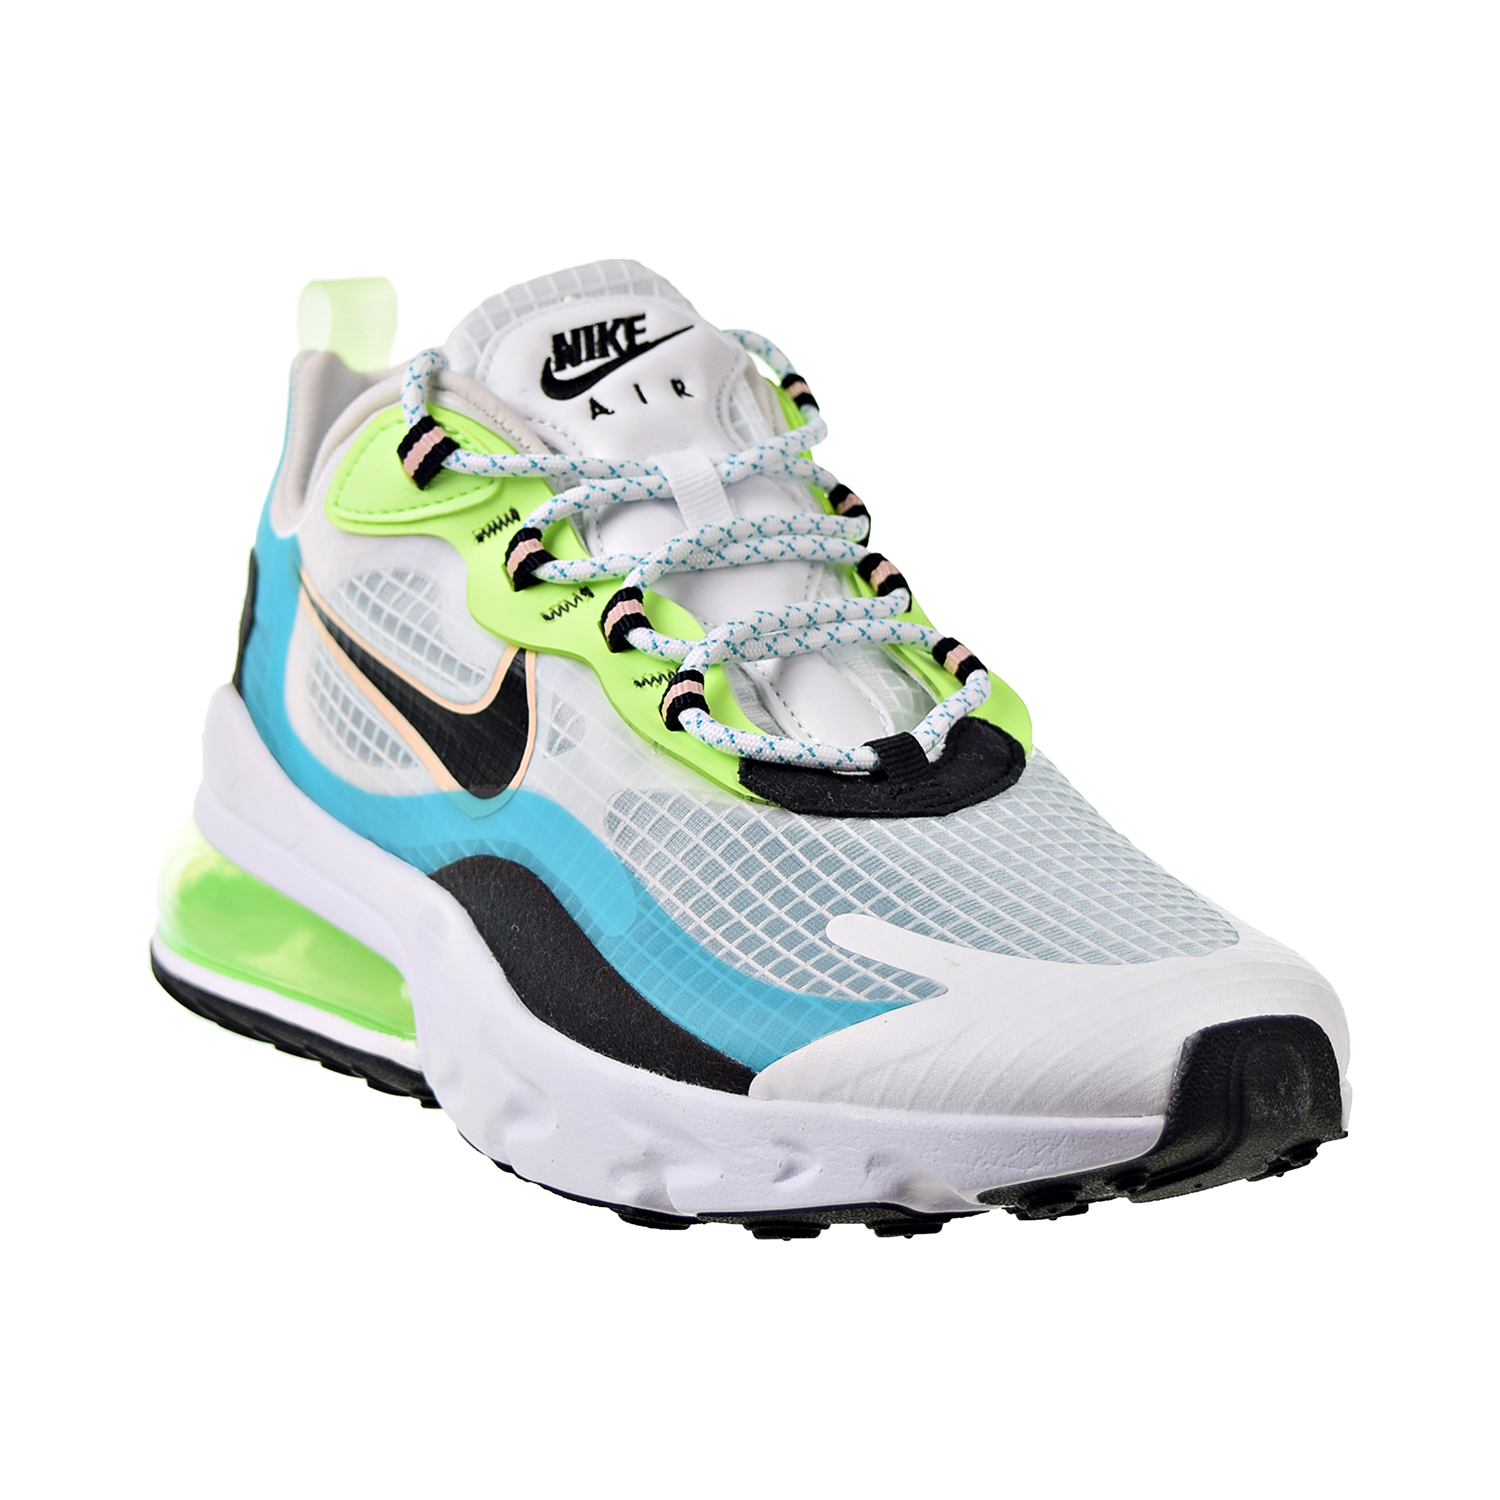 Nike Air Max 270 React SE Men's Shoes Oracle Aqua-Black-Ghost Green ct1265-300 - image 2 of 6